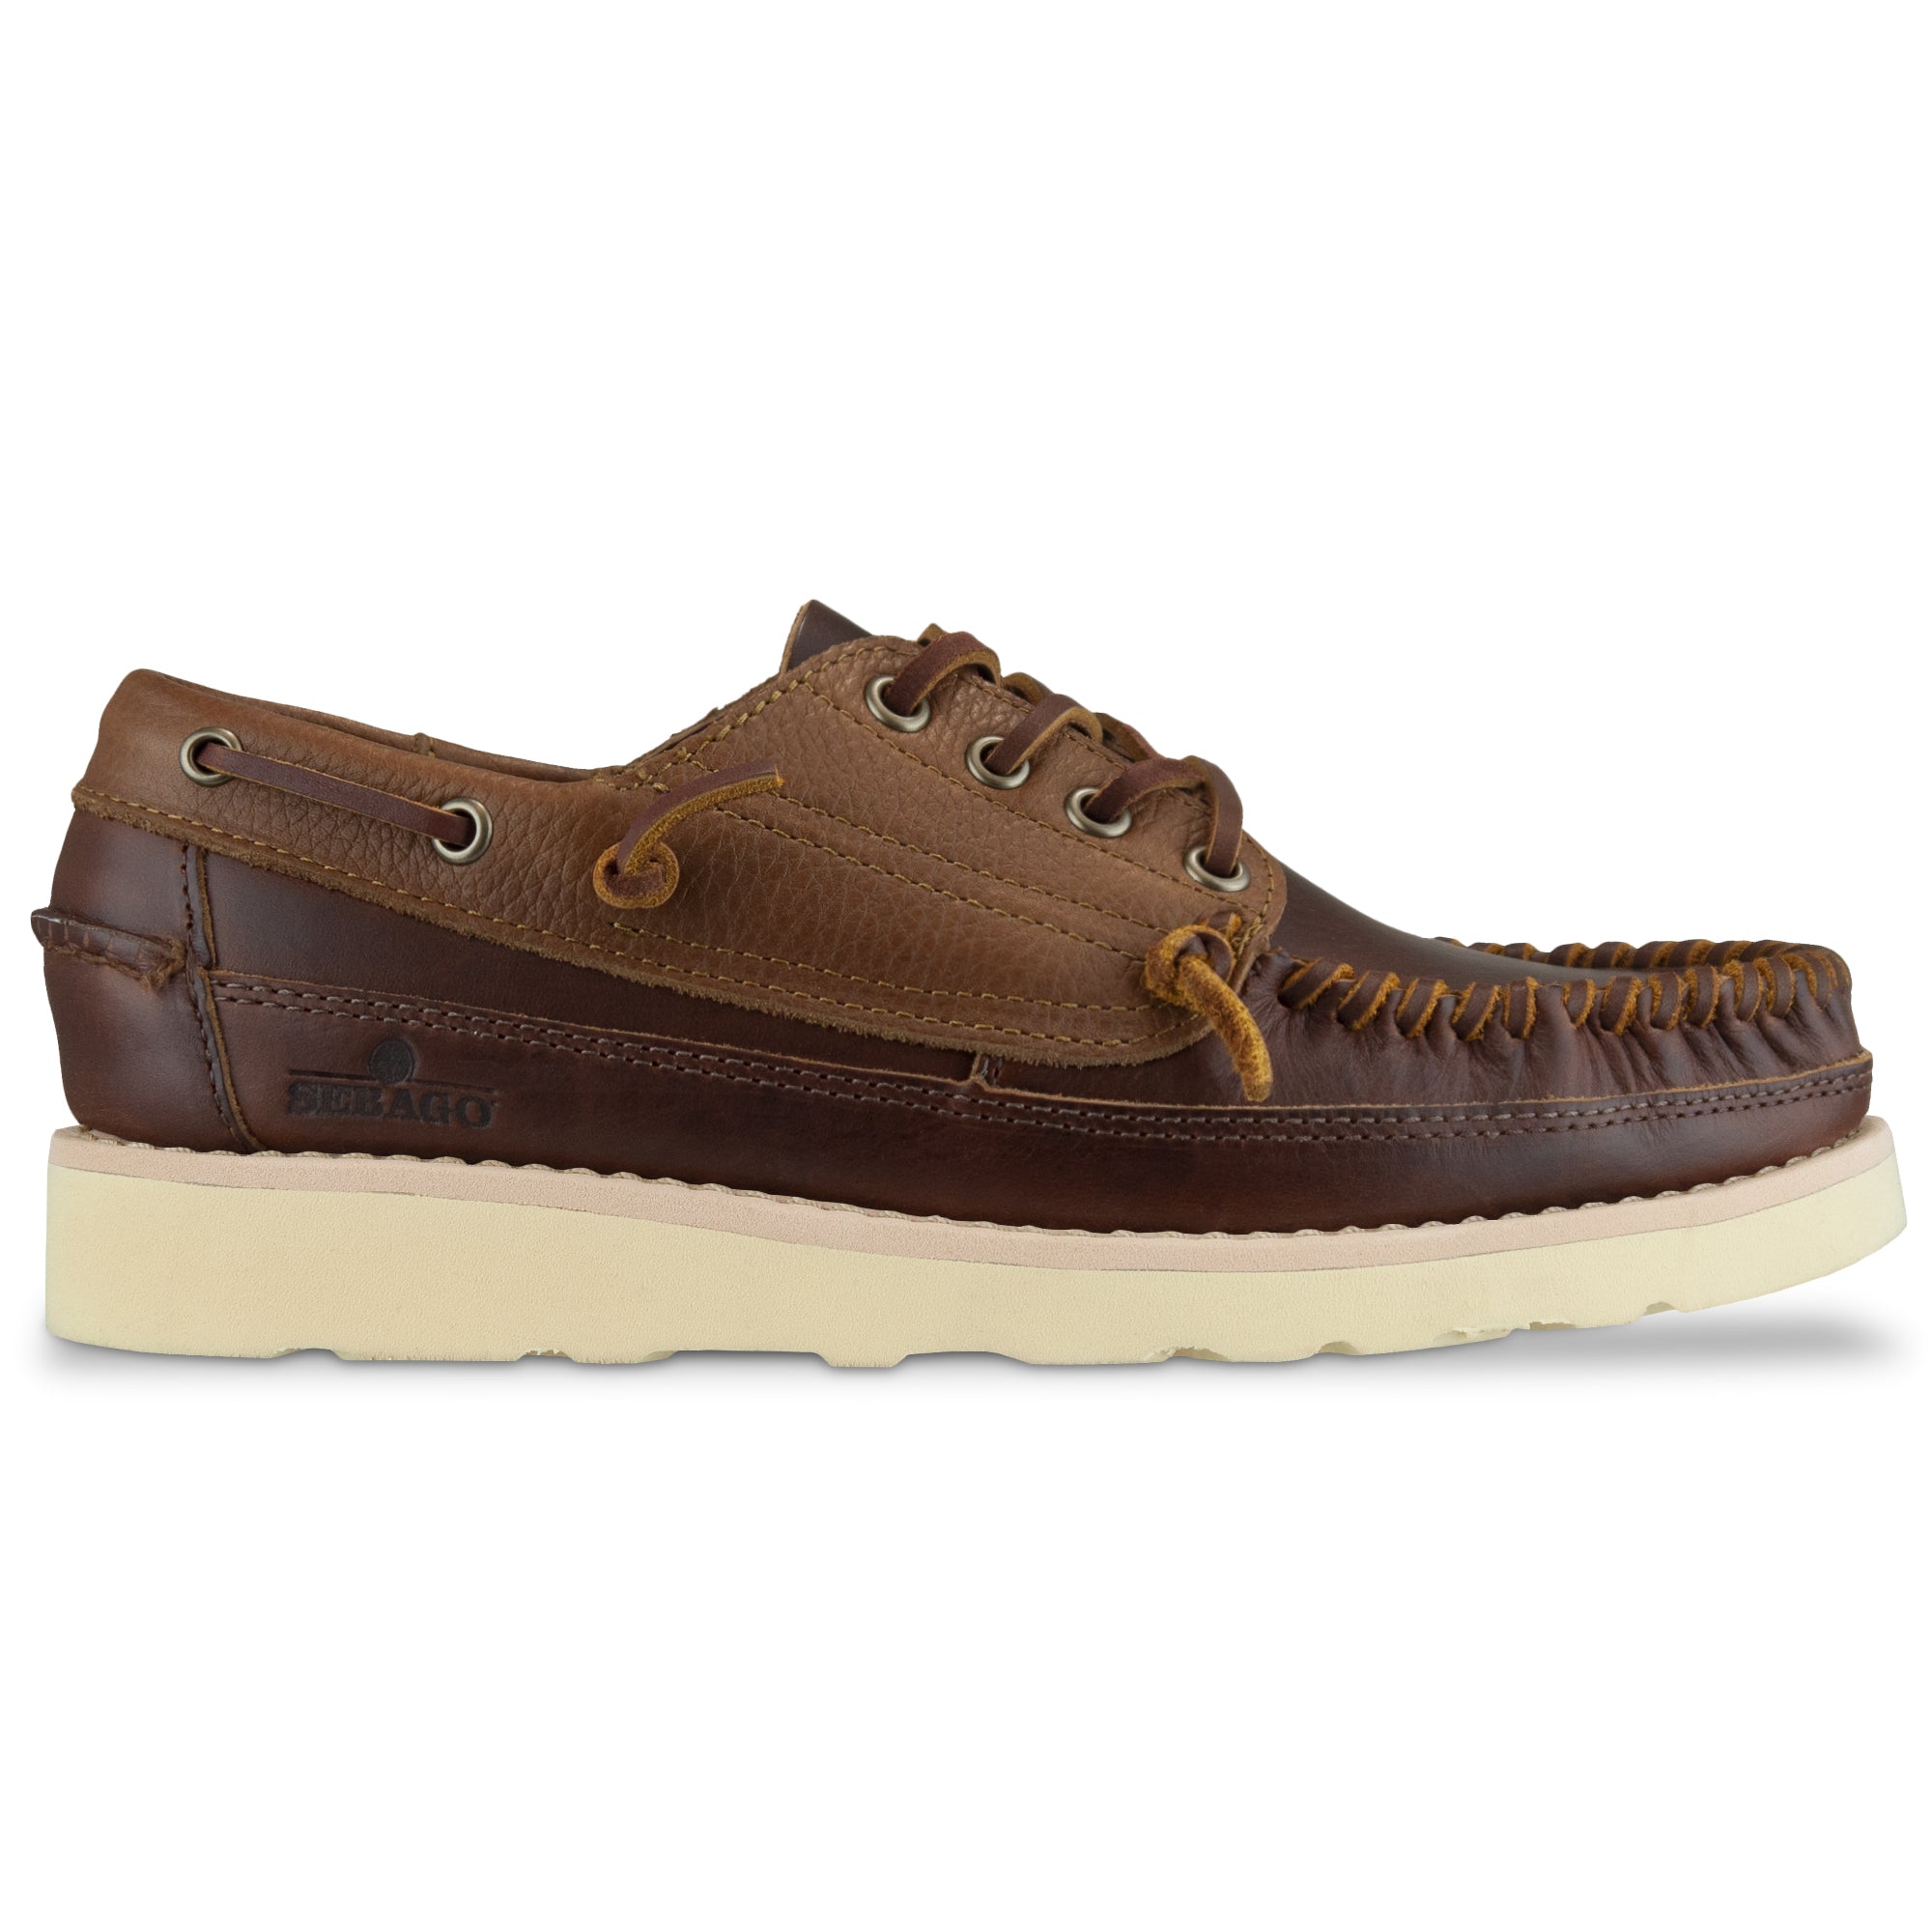 Sebago Campsides Seneca Leather Moccasin Shoes - Brown Cinnamon